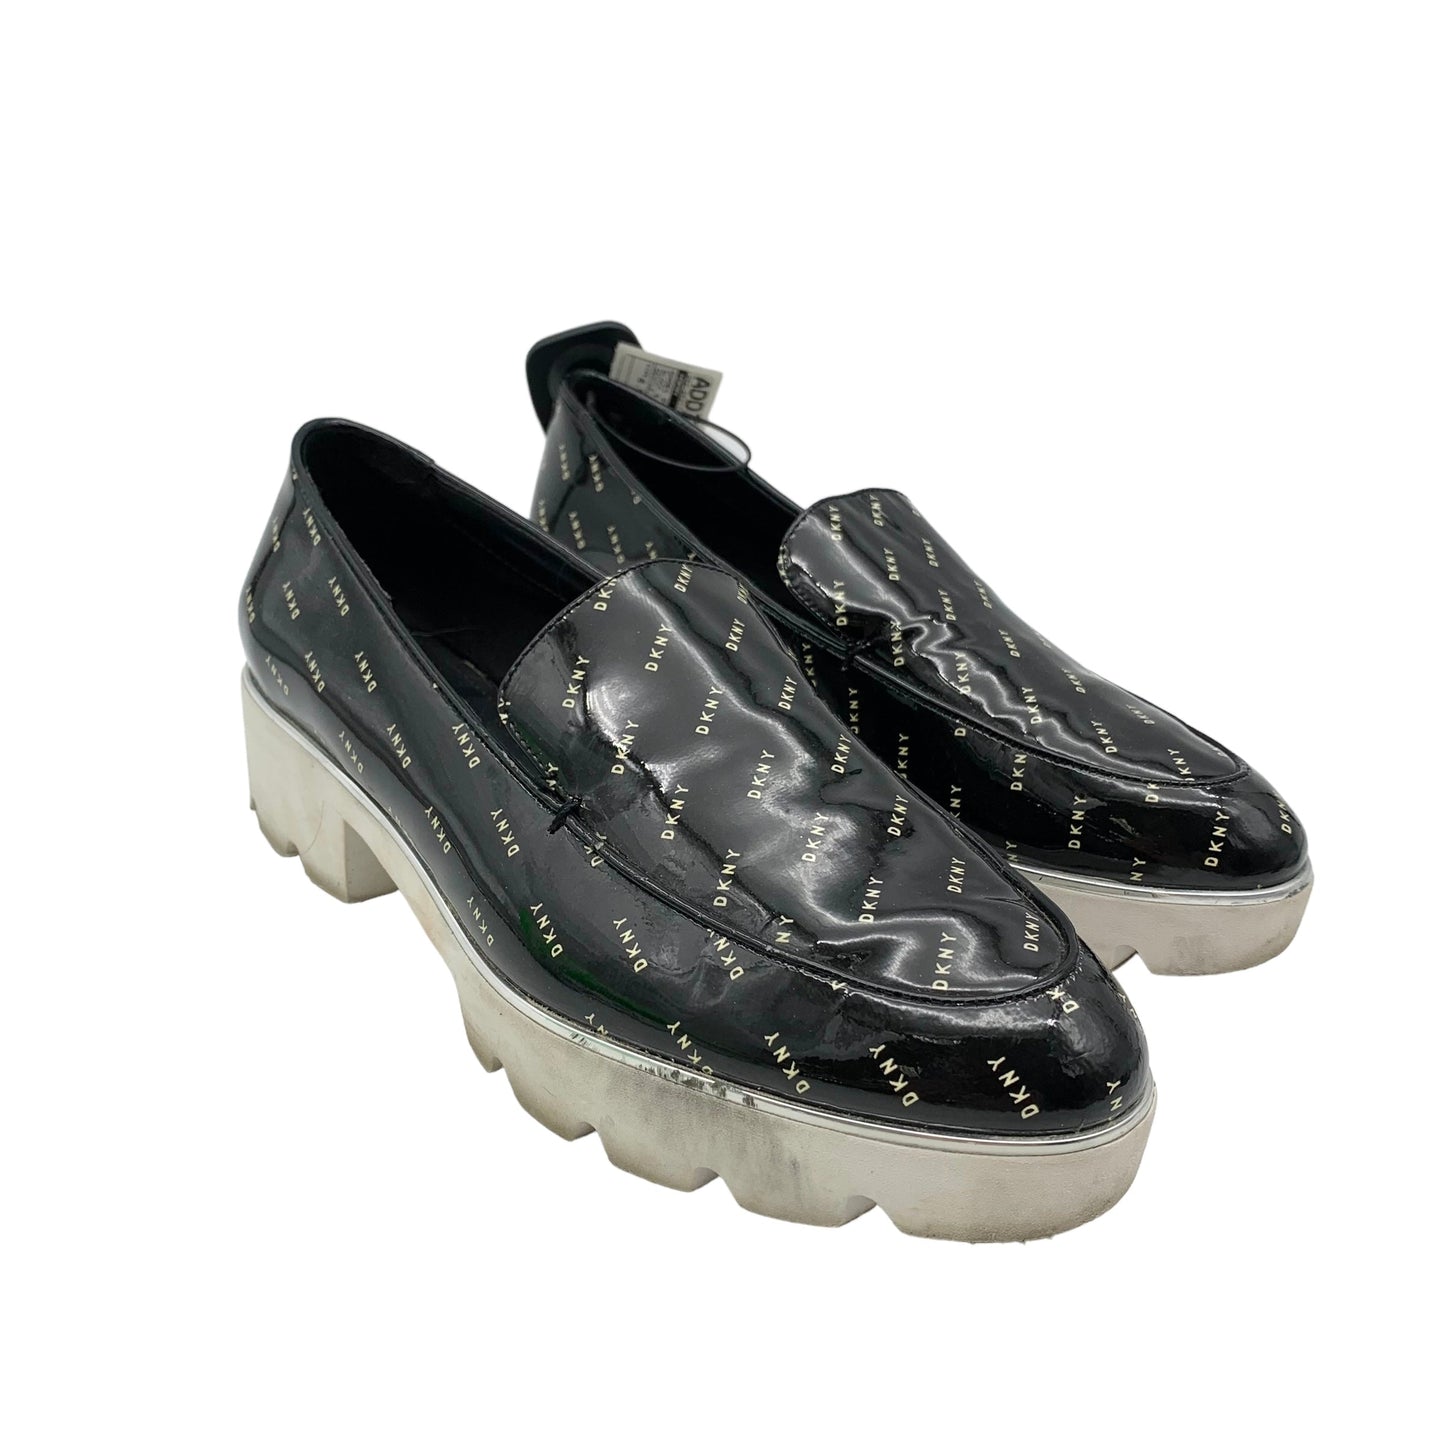 Black & Cream Shoes Flats Dkny, Size 8.5